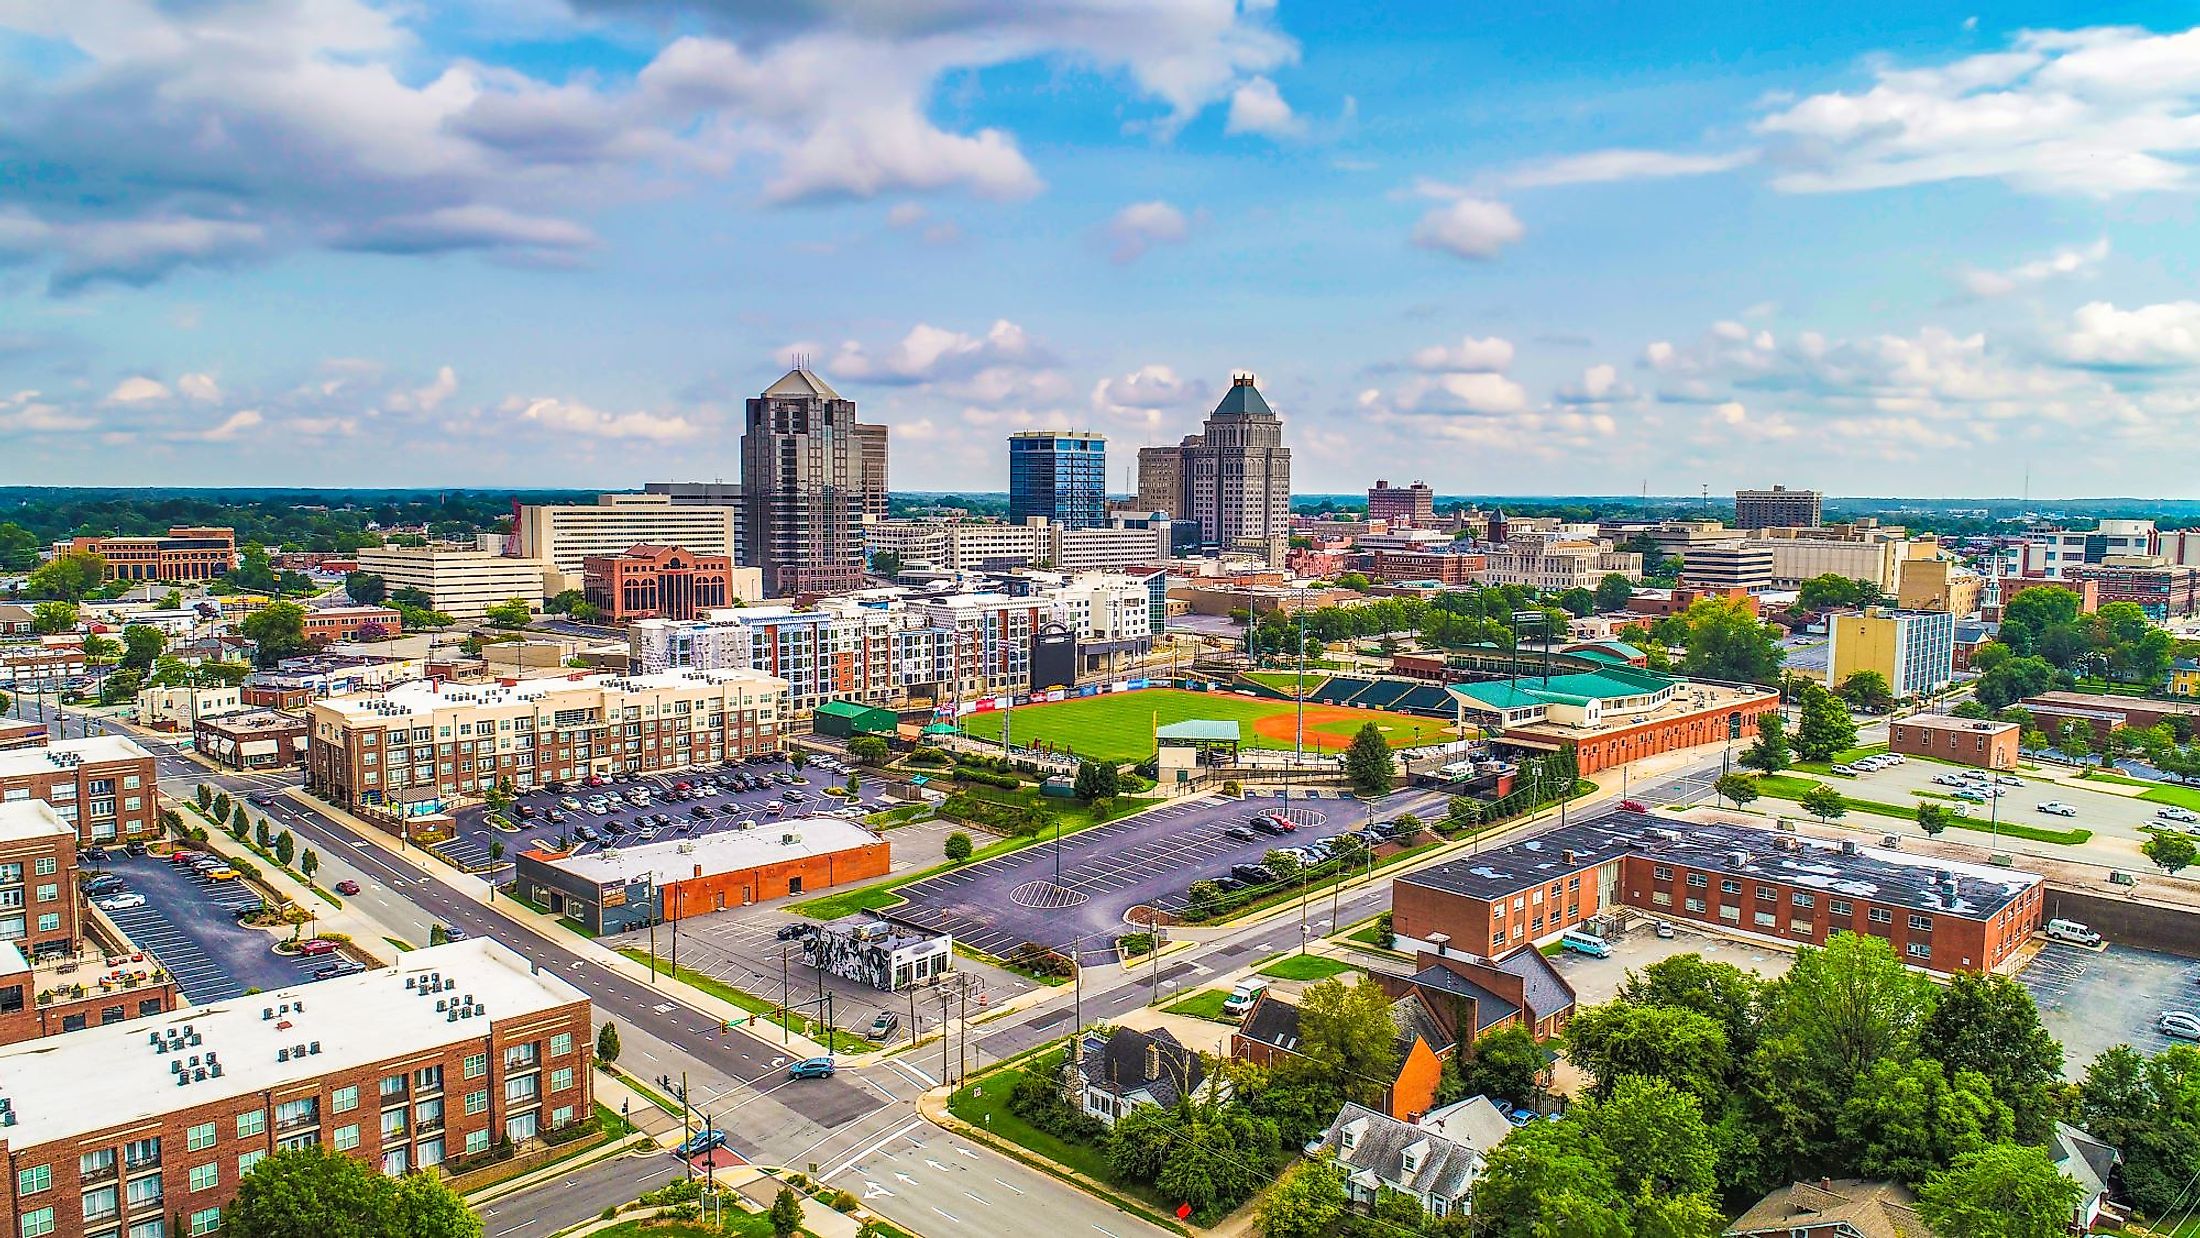 Aerial view of downtown Greensboro, North Carolina